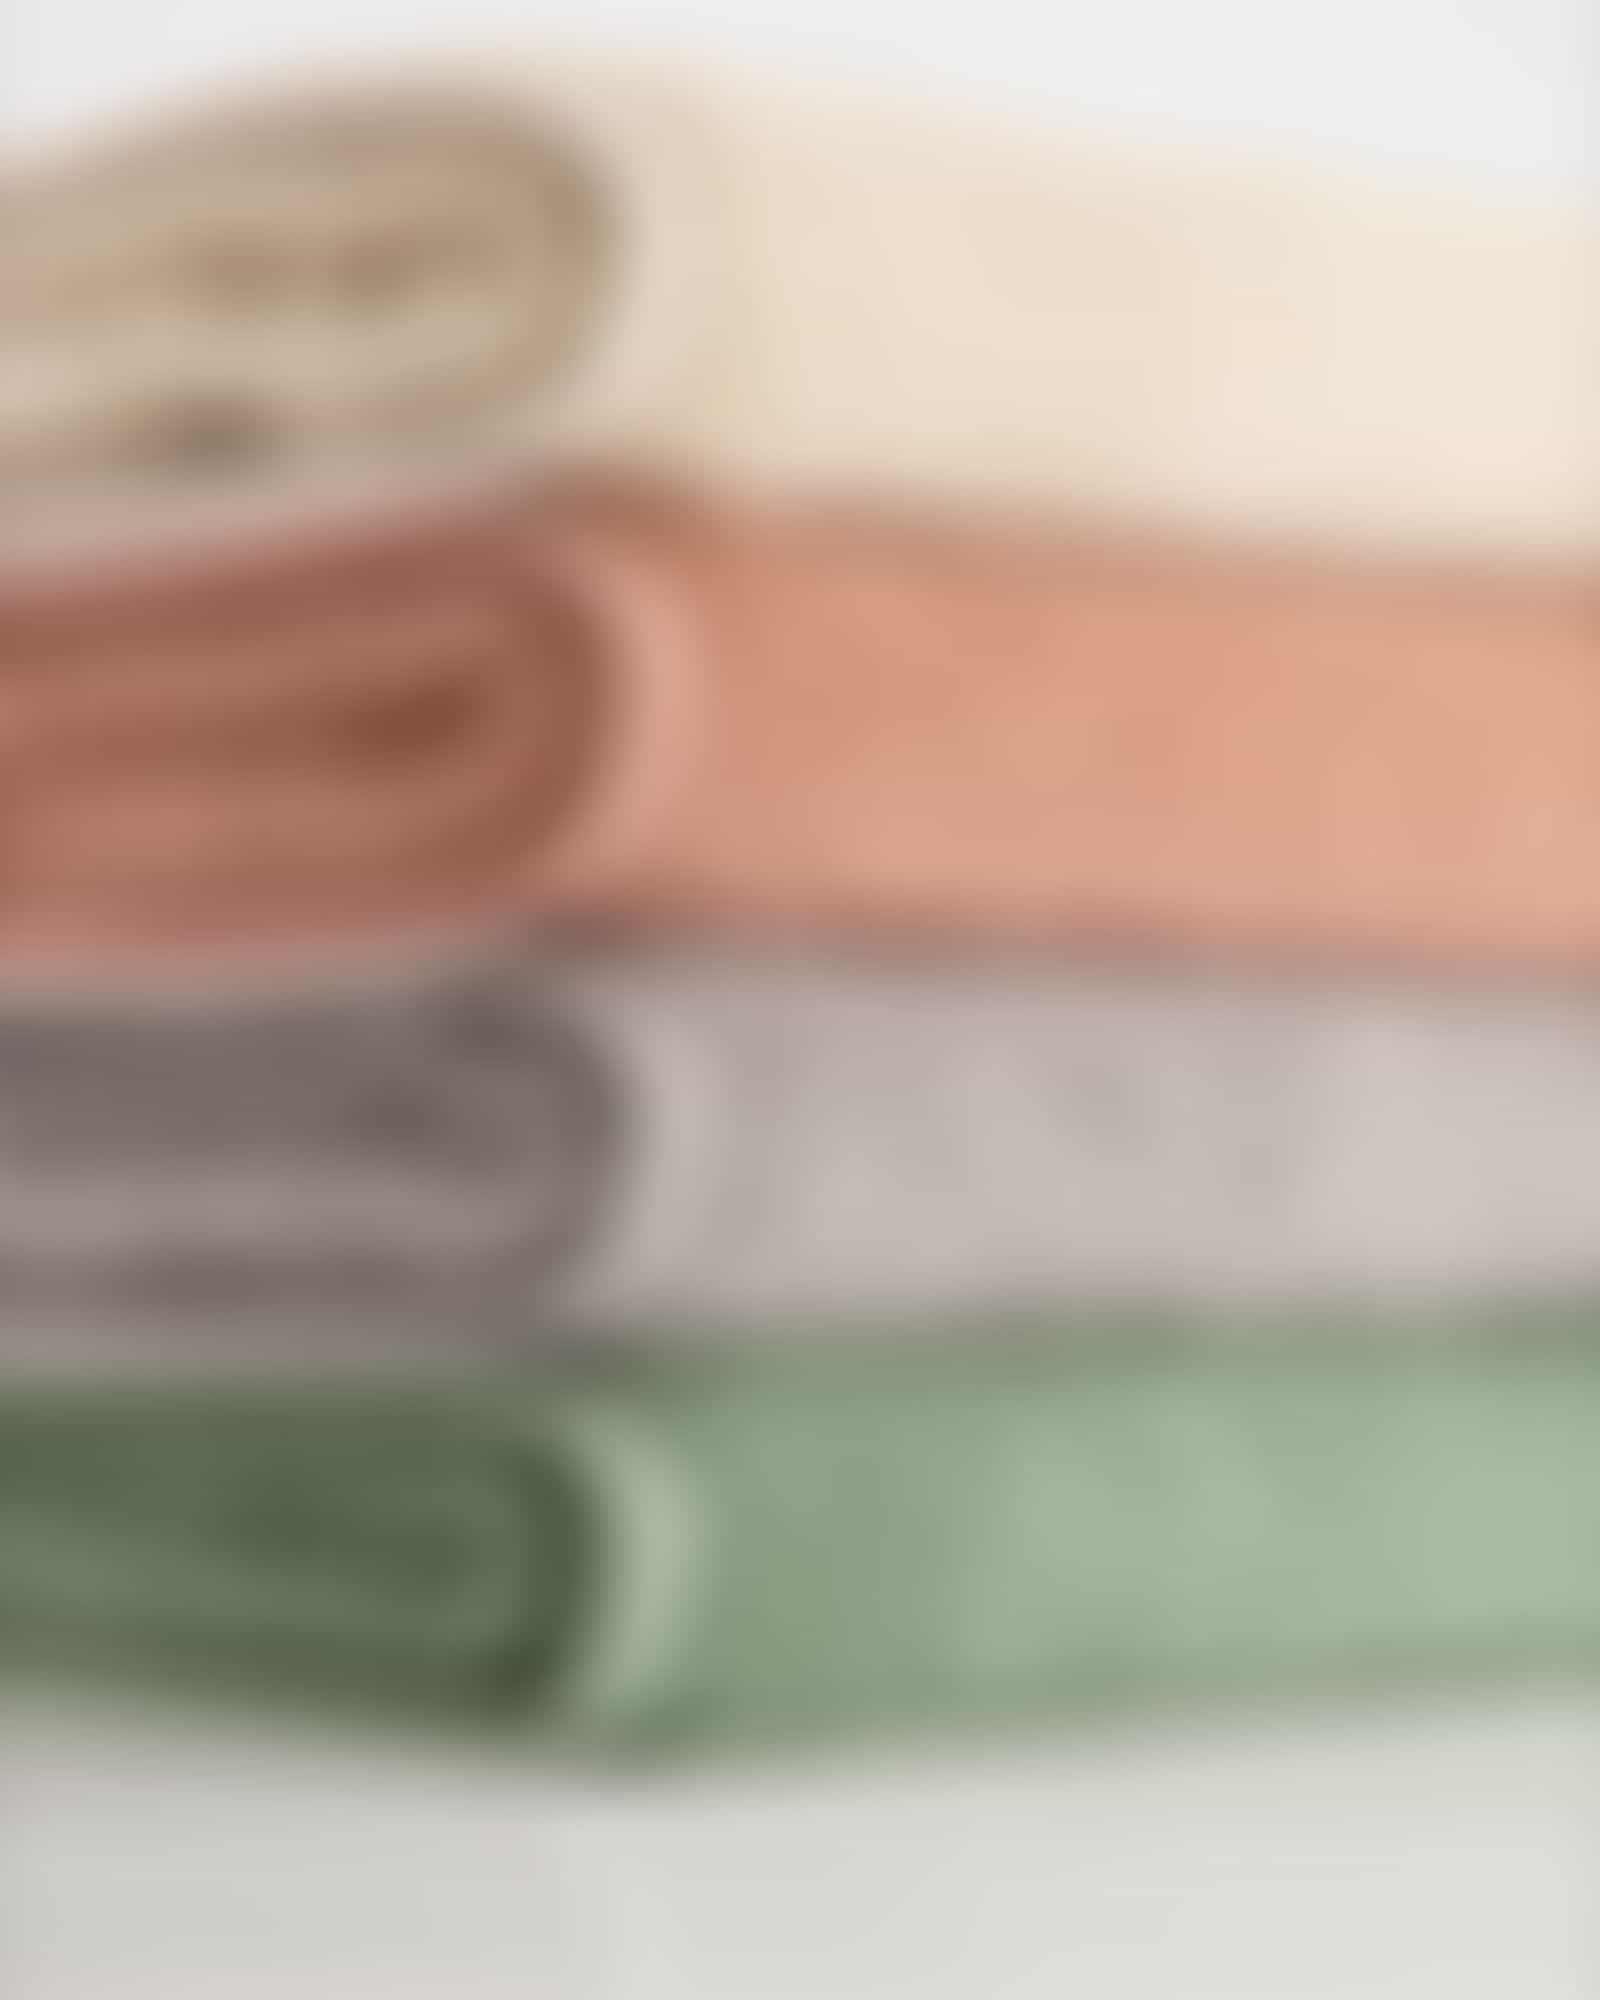 Cawö Handtücher Pure 6500 - Farbe: salbei - 443 - Waschhandschuh 16x22 cm